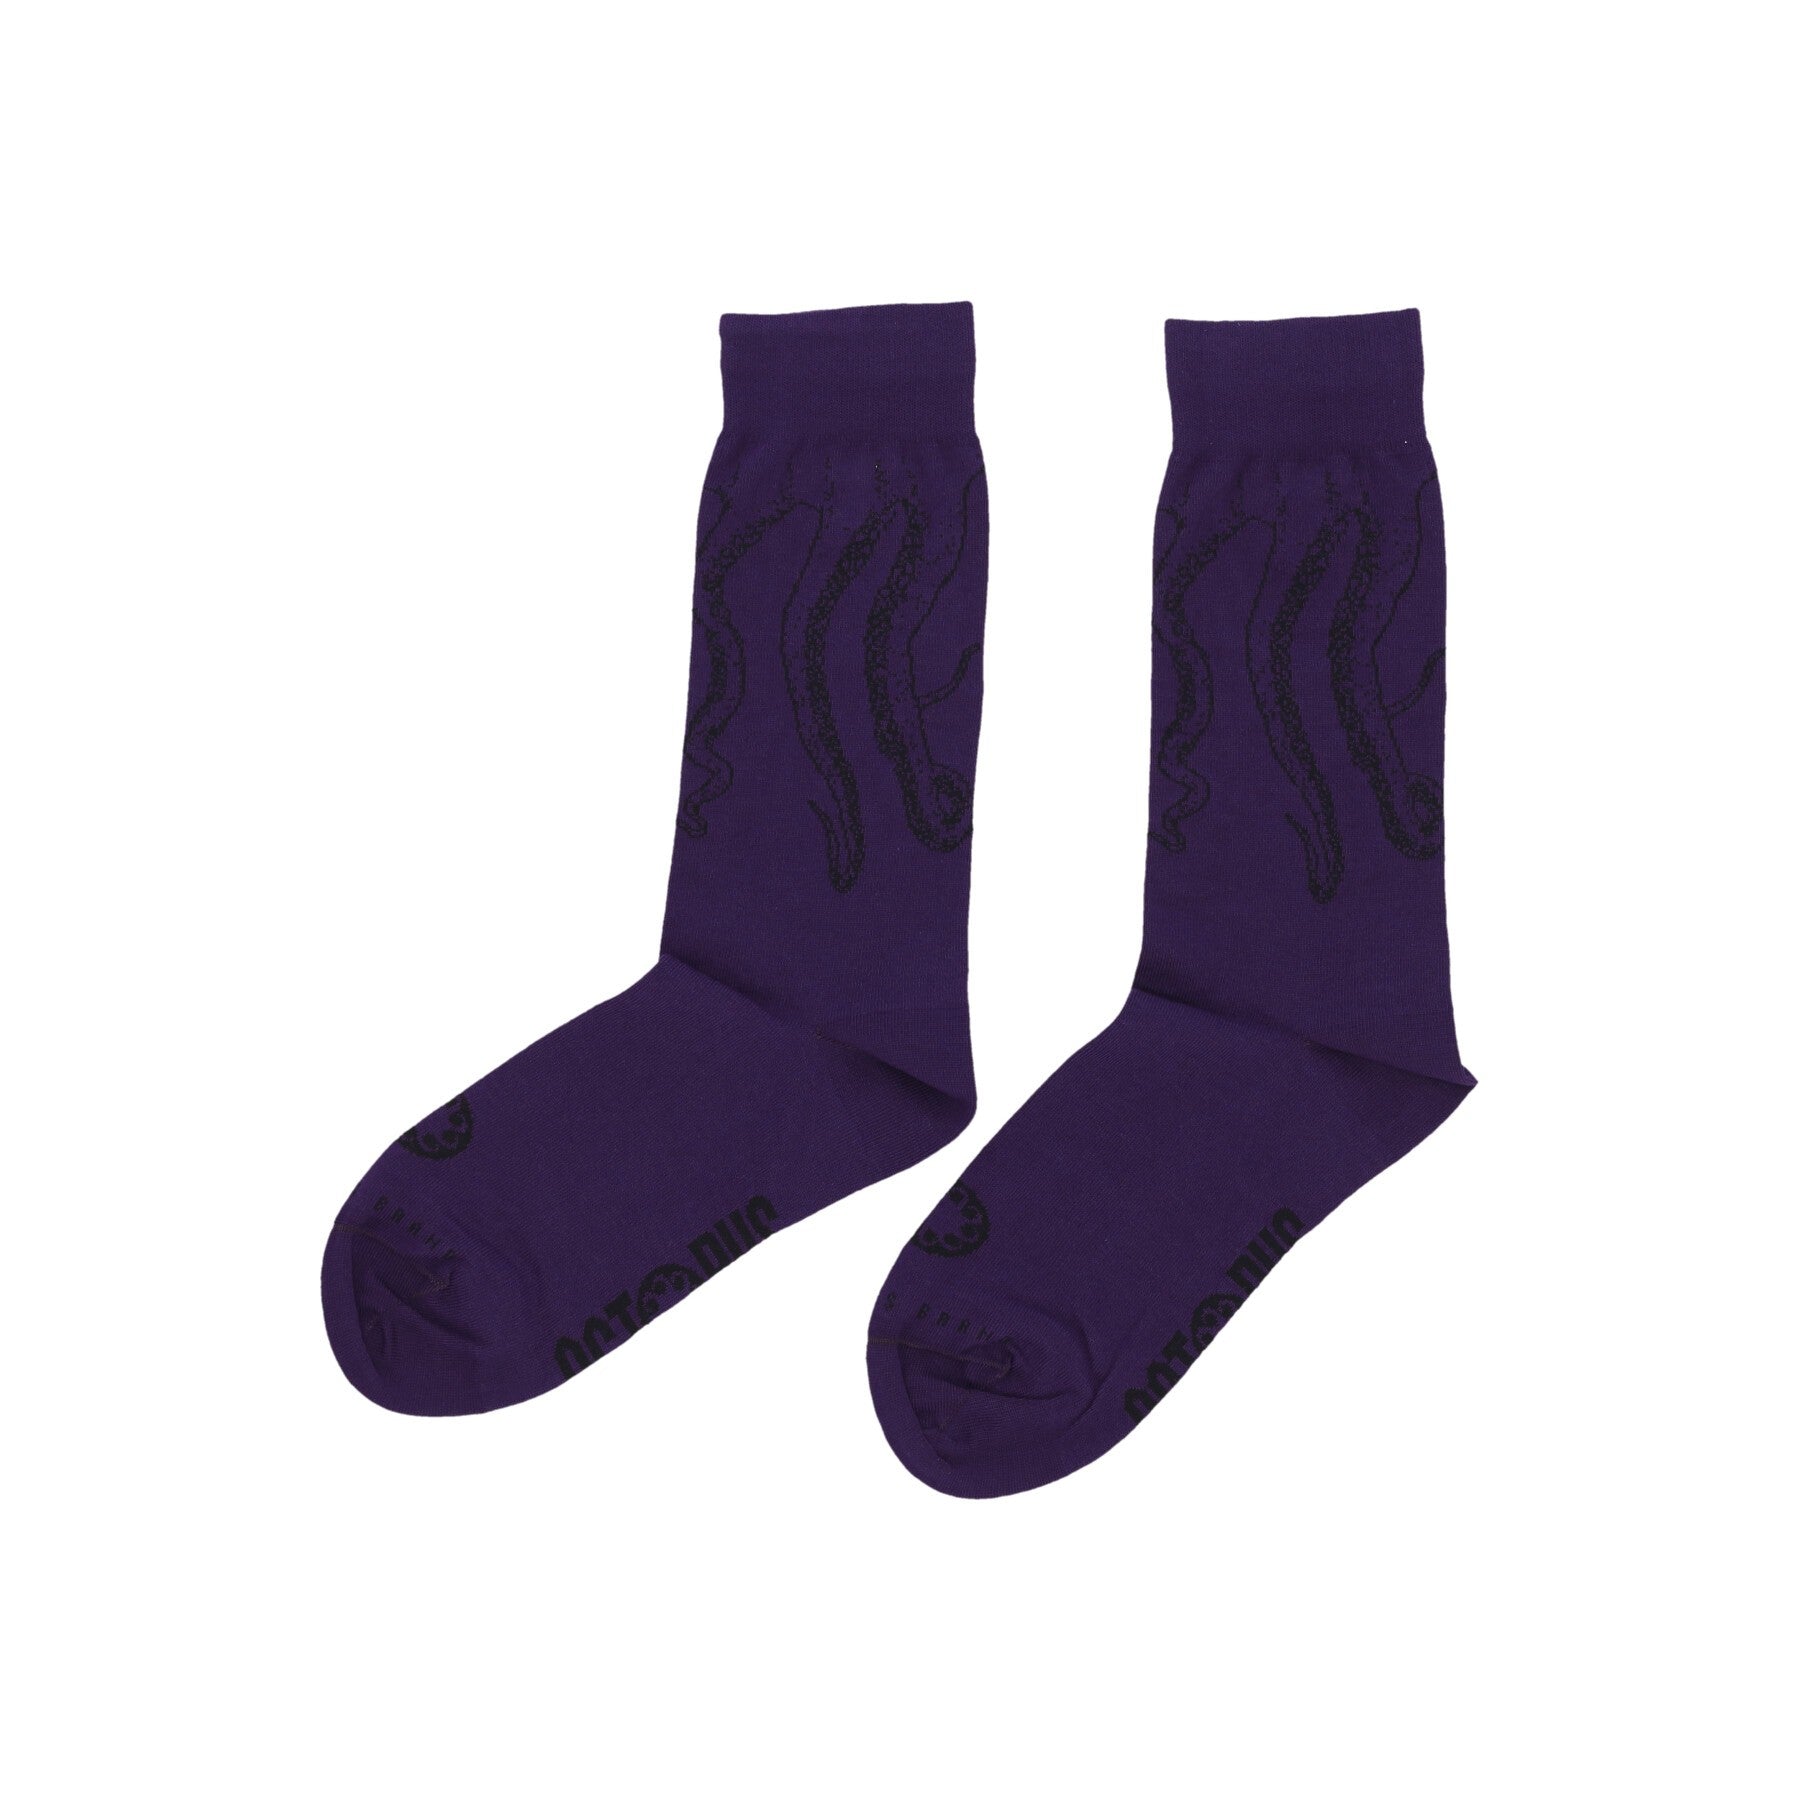 Octopus, Calza Media Uomo Outline Socks, Black/purple